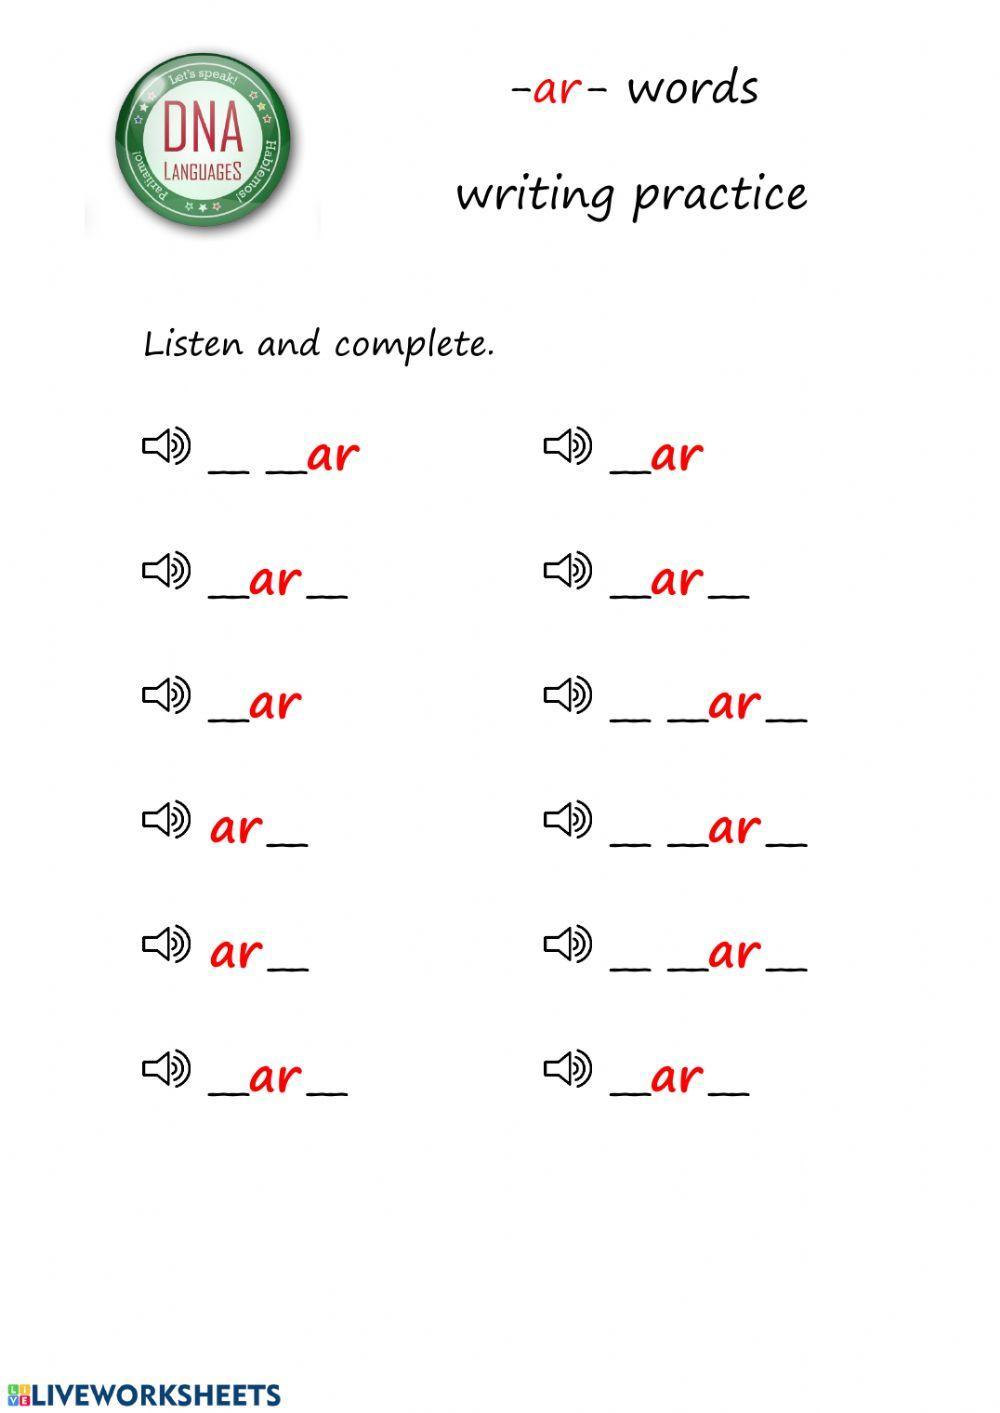 -ar- words writing practice (easy)